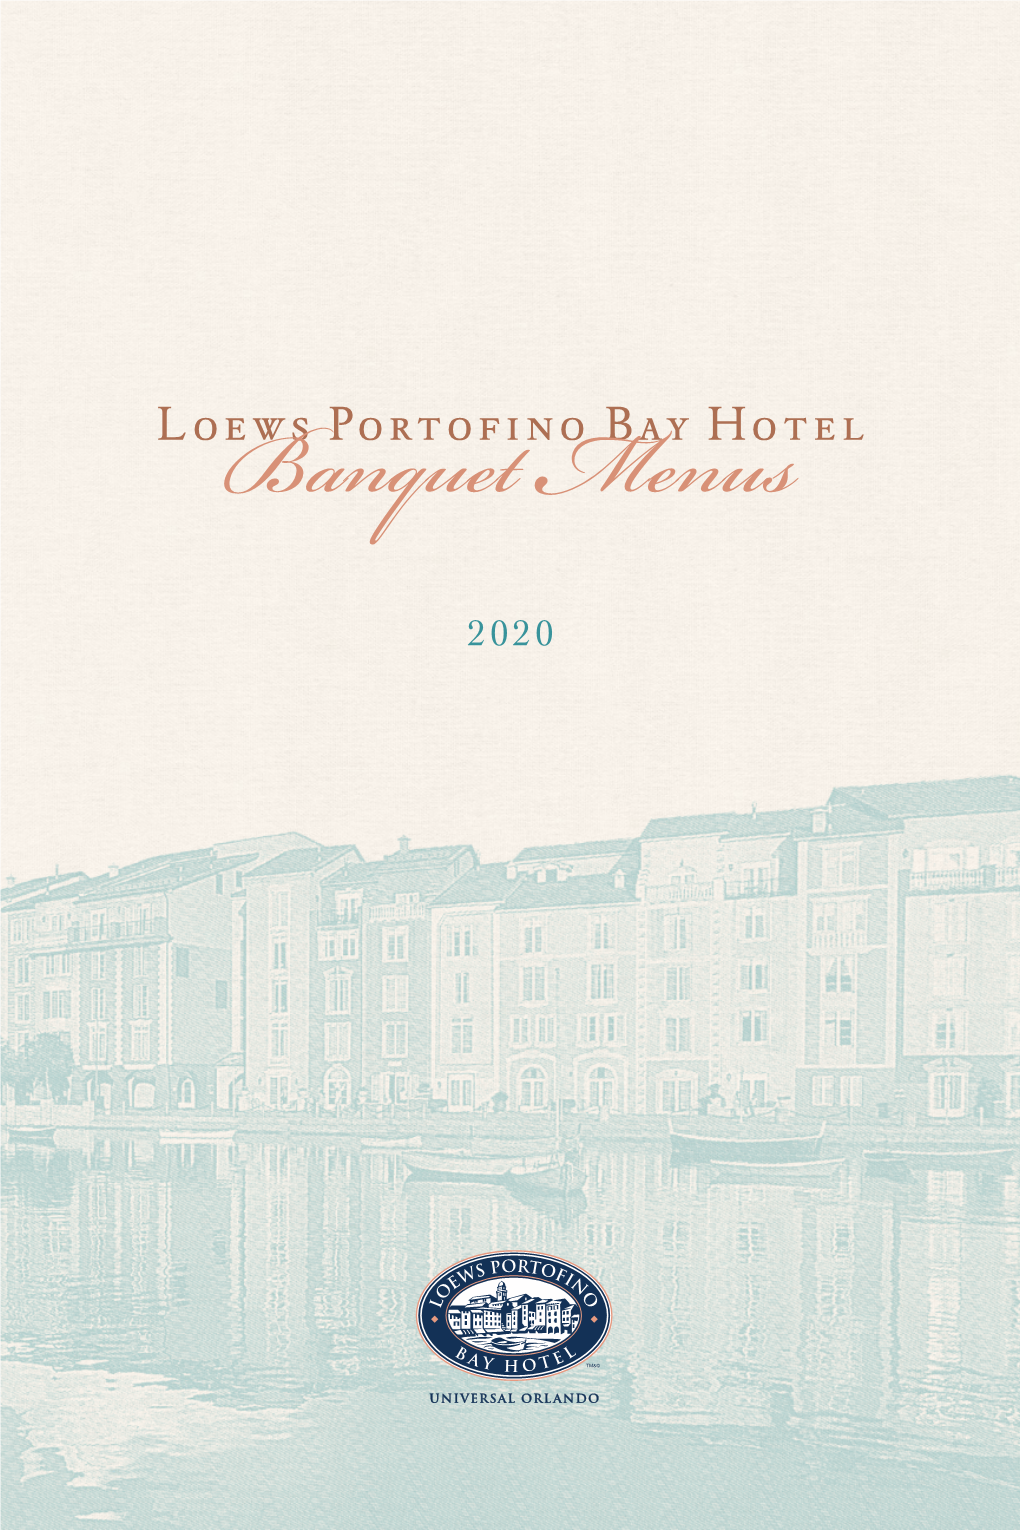 Banquet Menus 2020 Welcome to Loews Portofino Bay Hotel